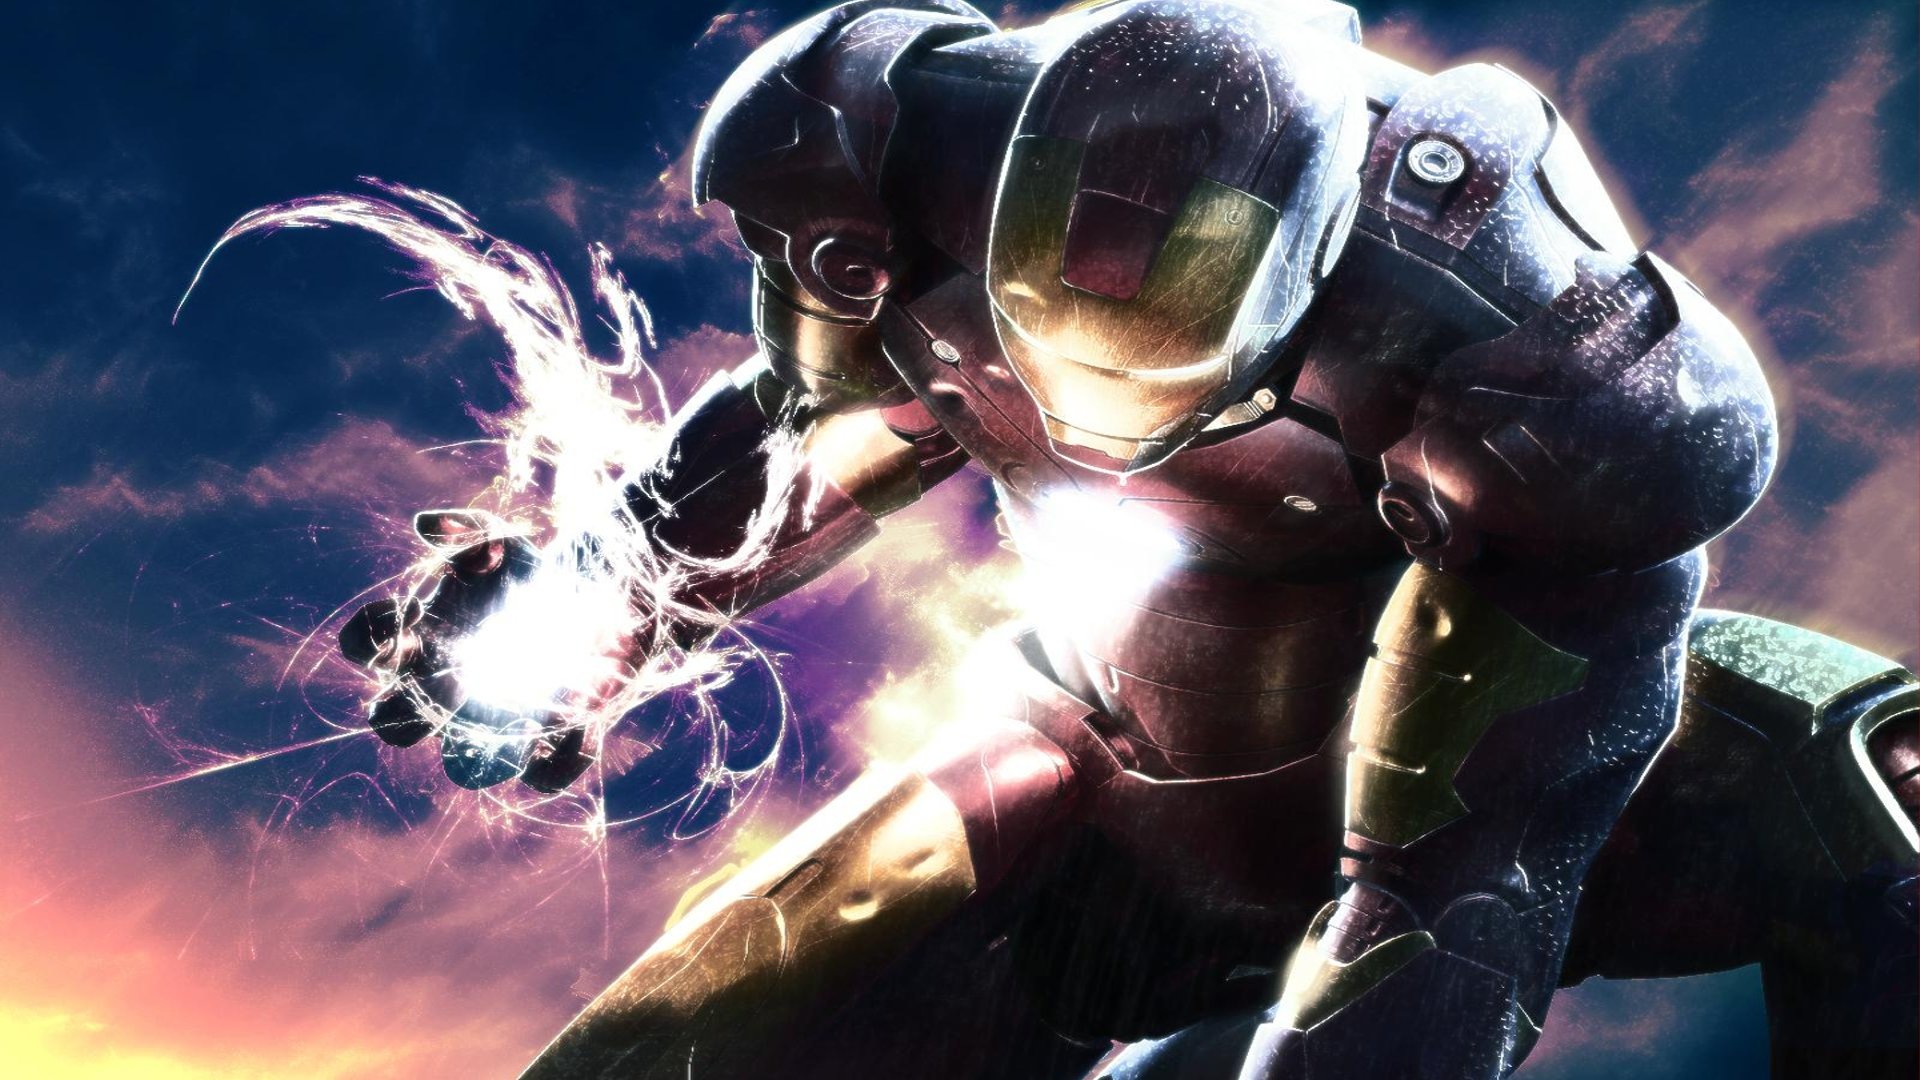 iron man hd wallpapers,action adventure game,fictional character,cg artwork,superhero,space